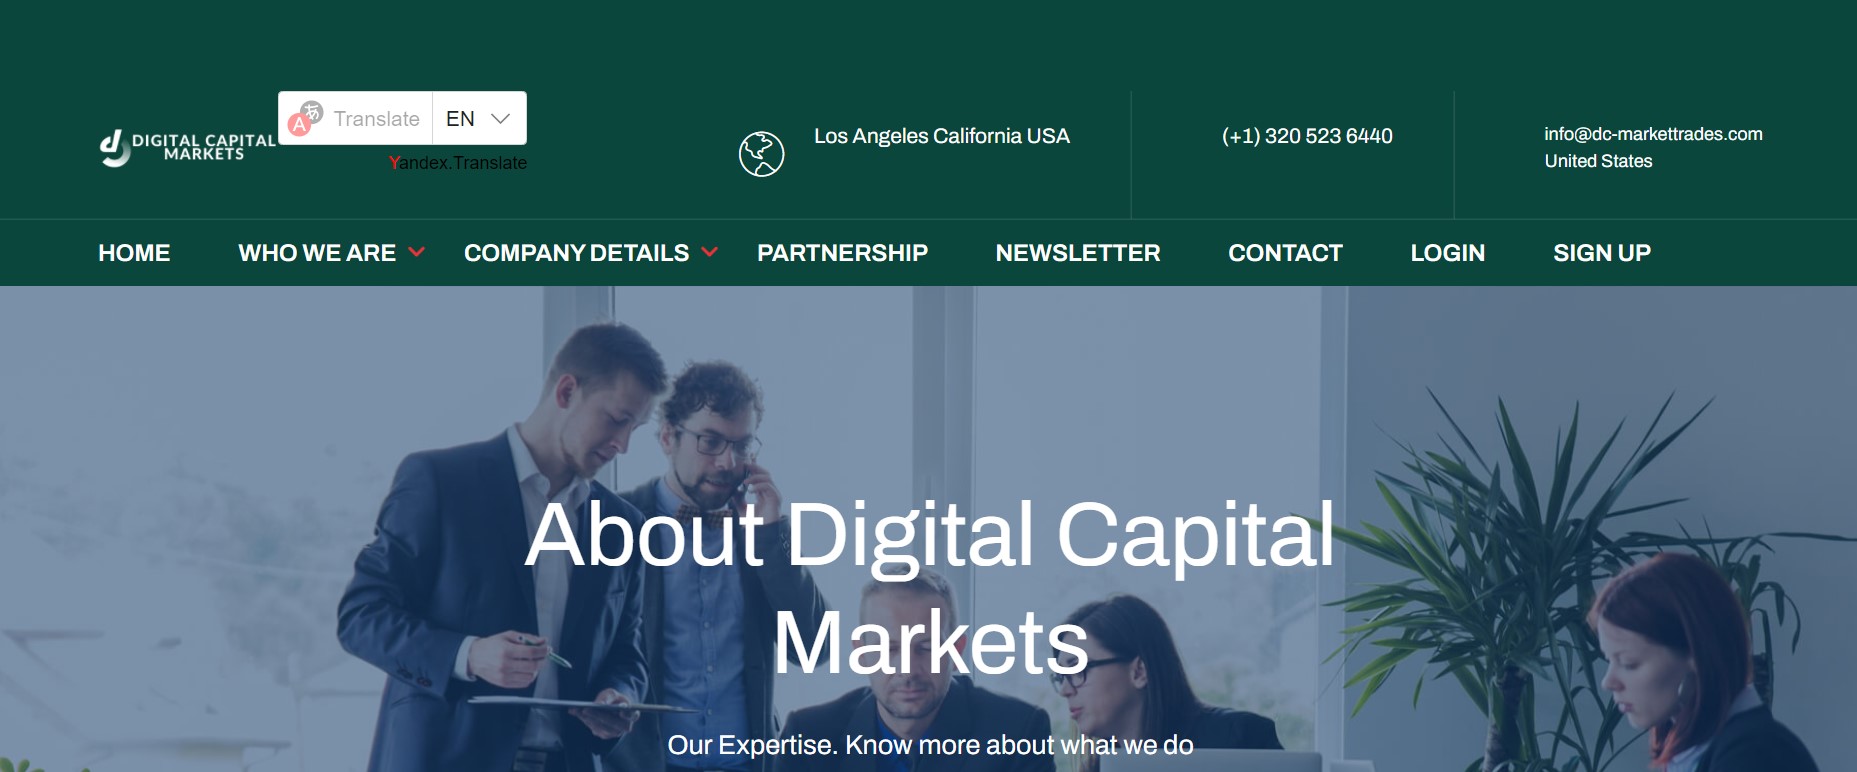 Digital Capital Markets website